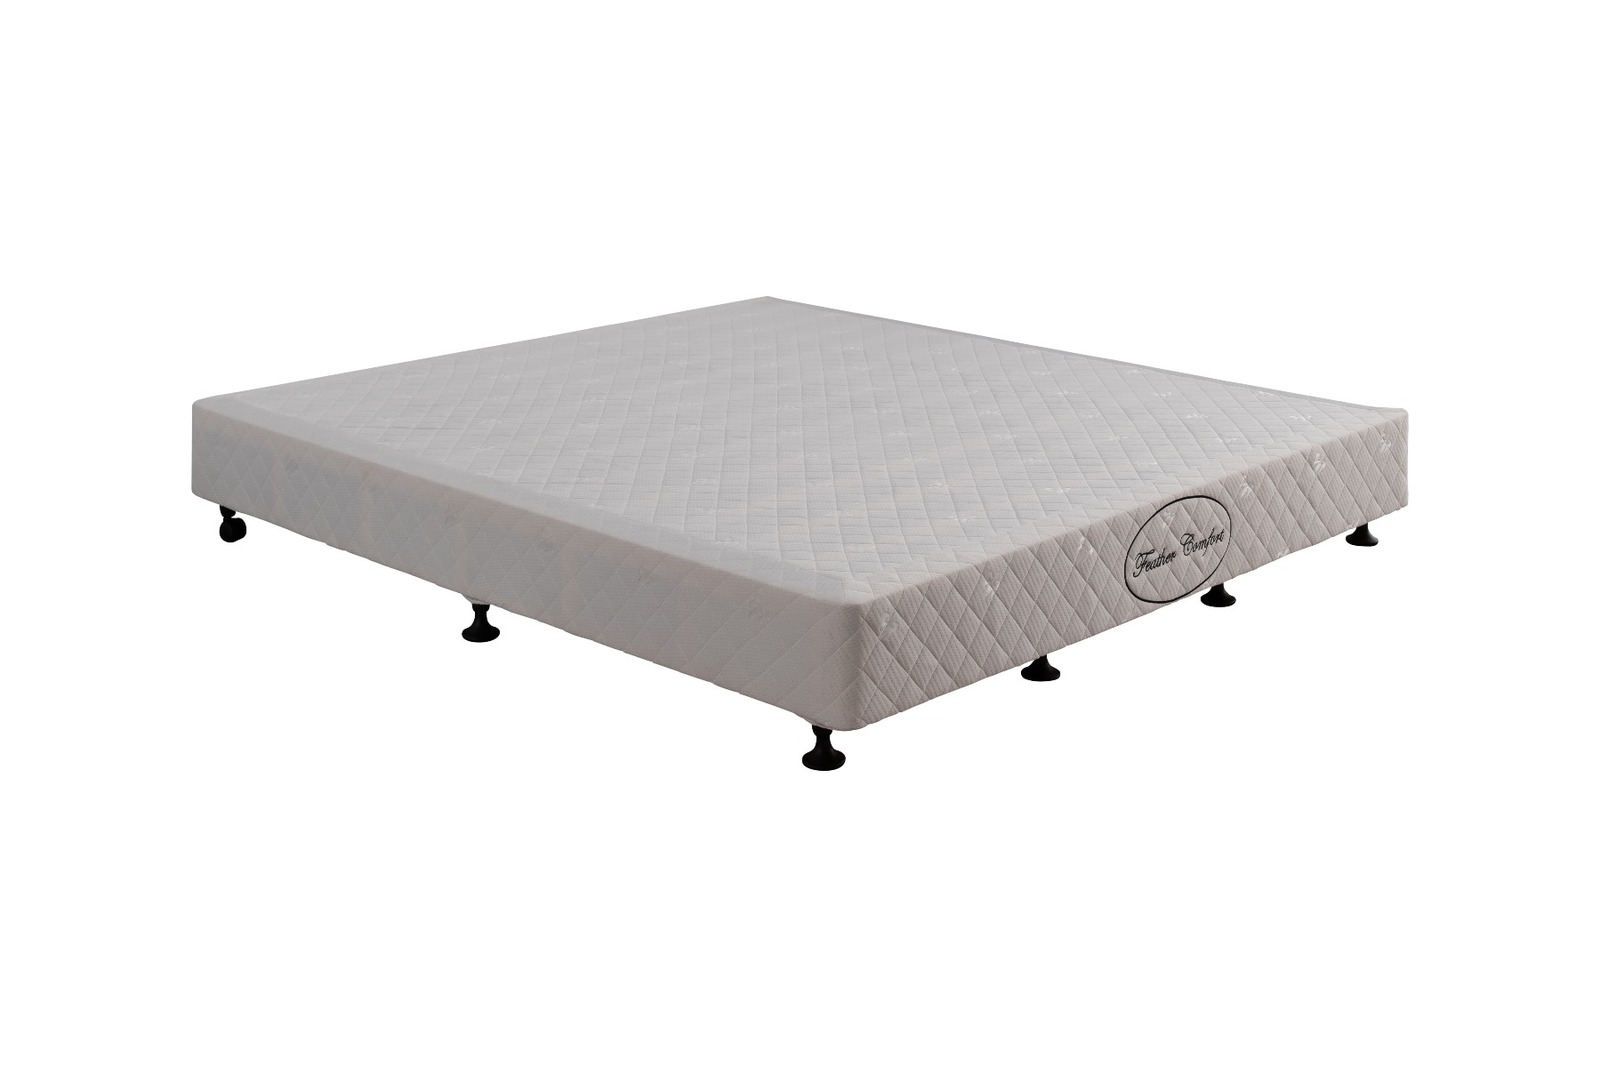 queen mattress base with wheels